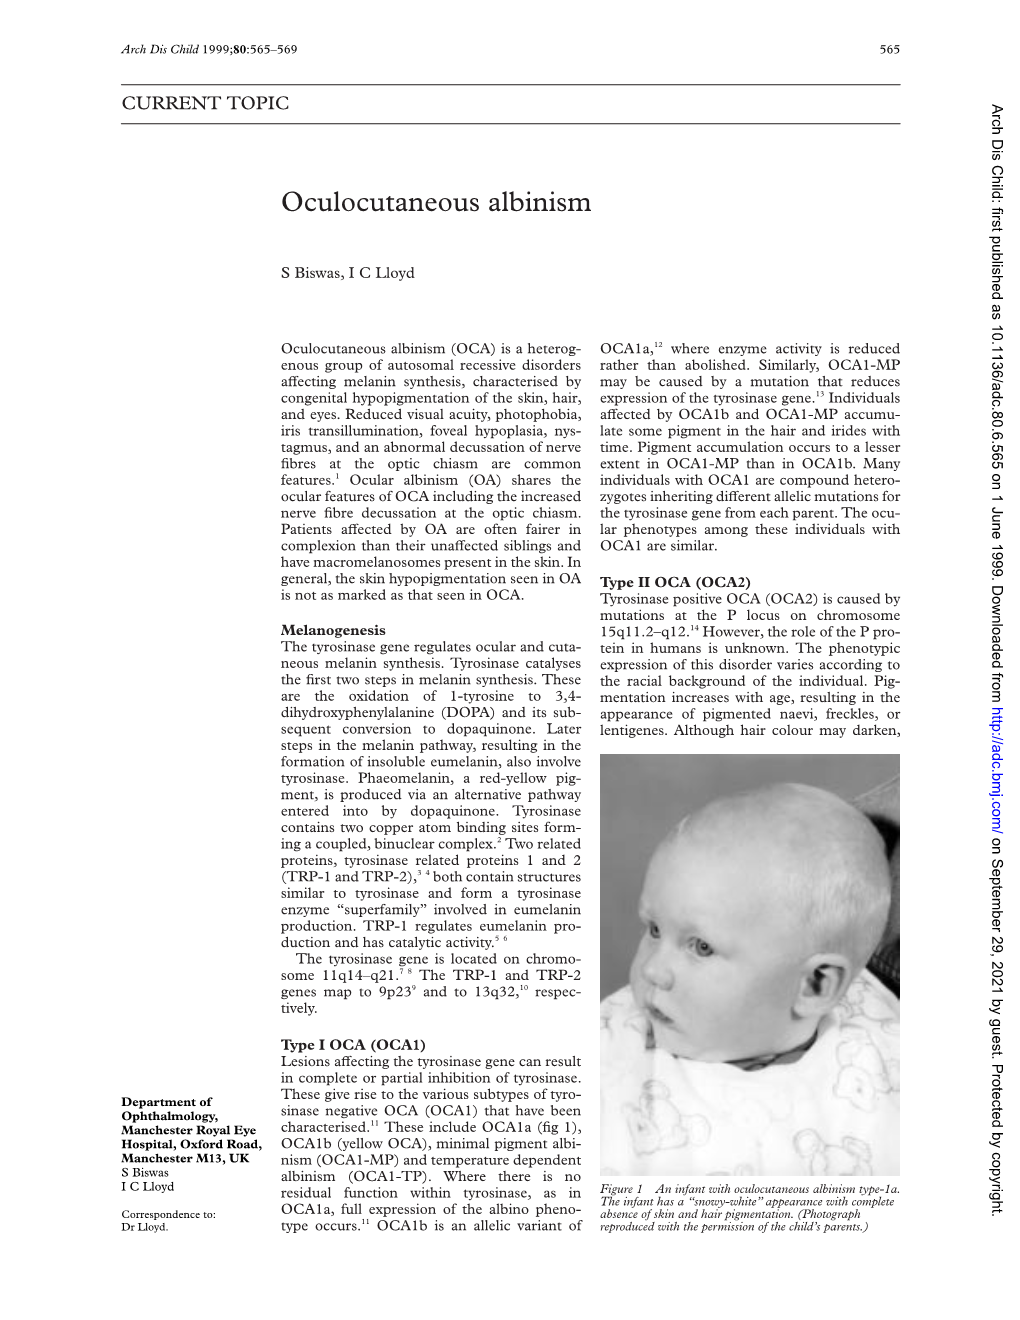 Oculocutaneous Albinism